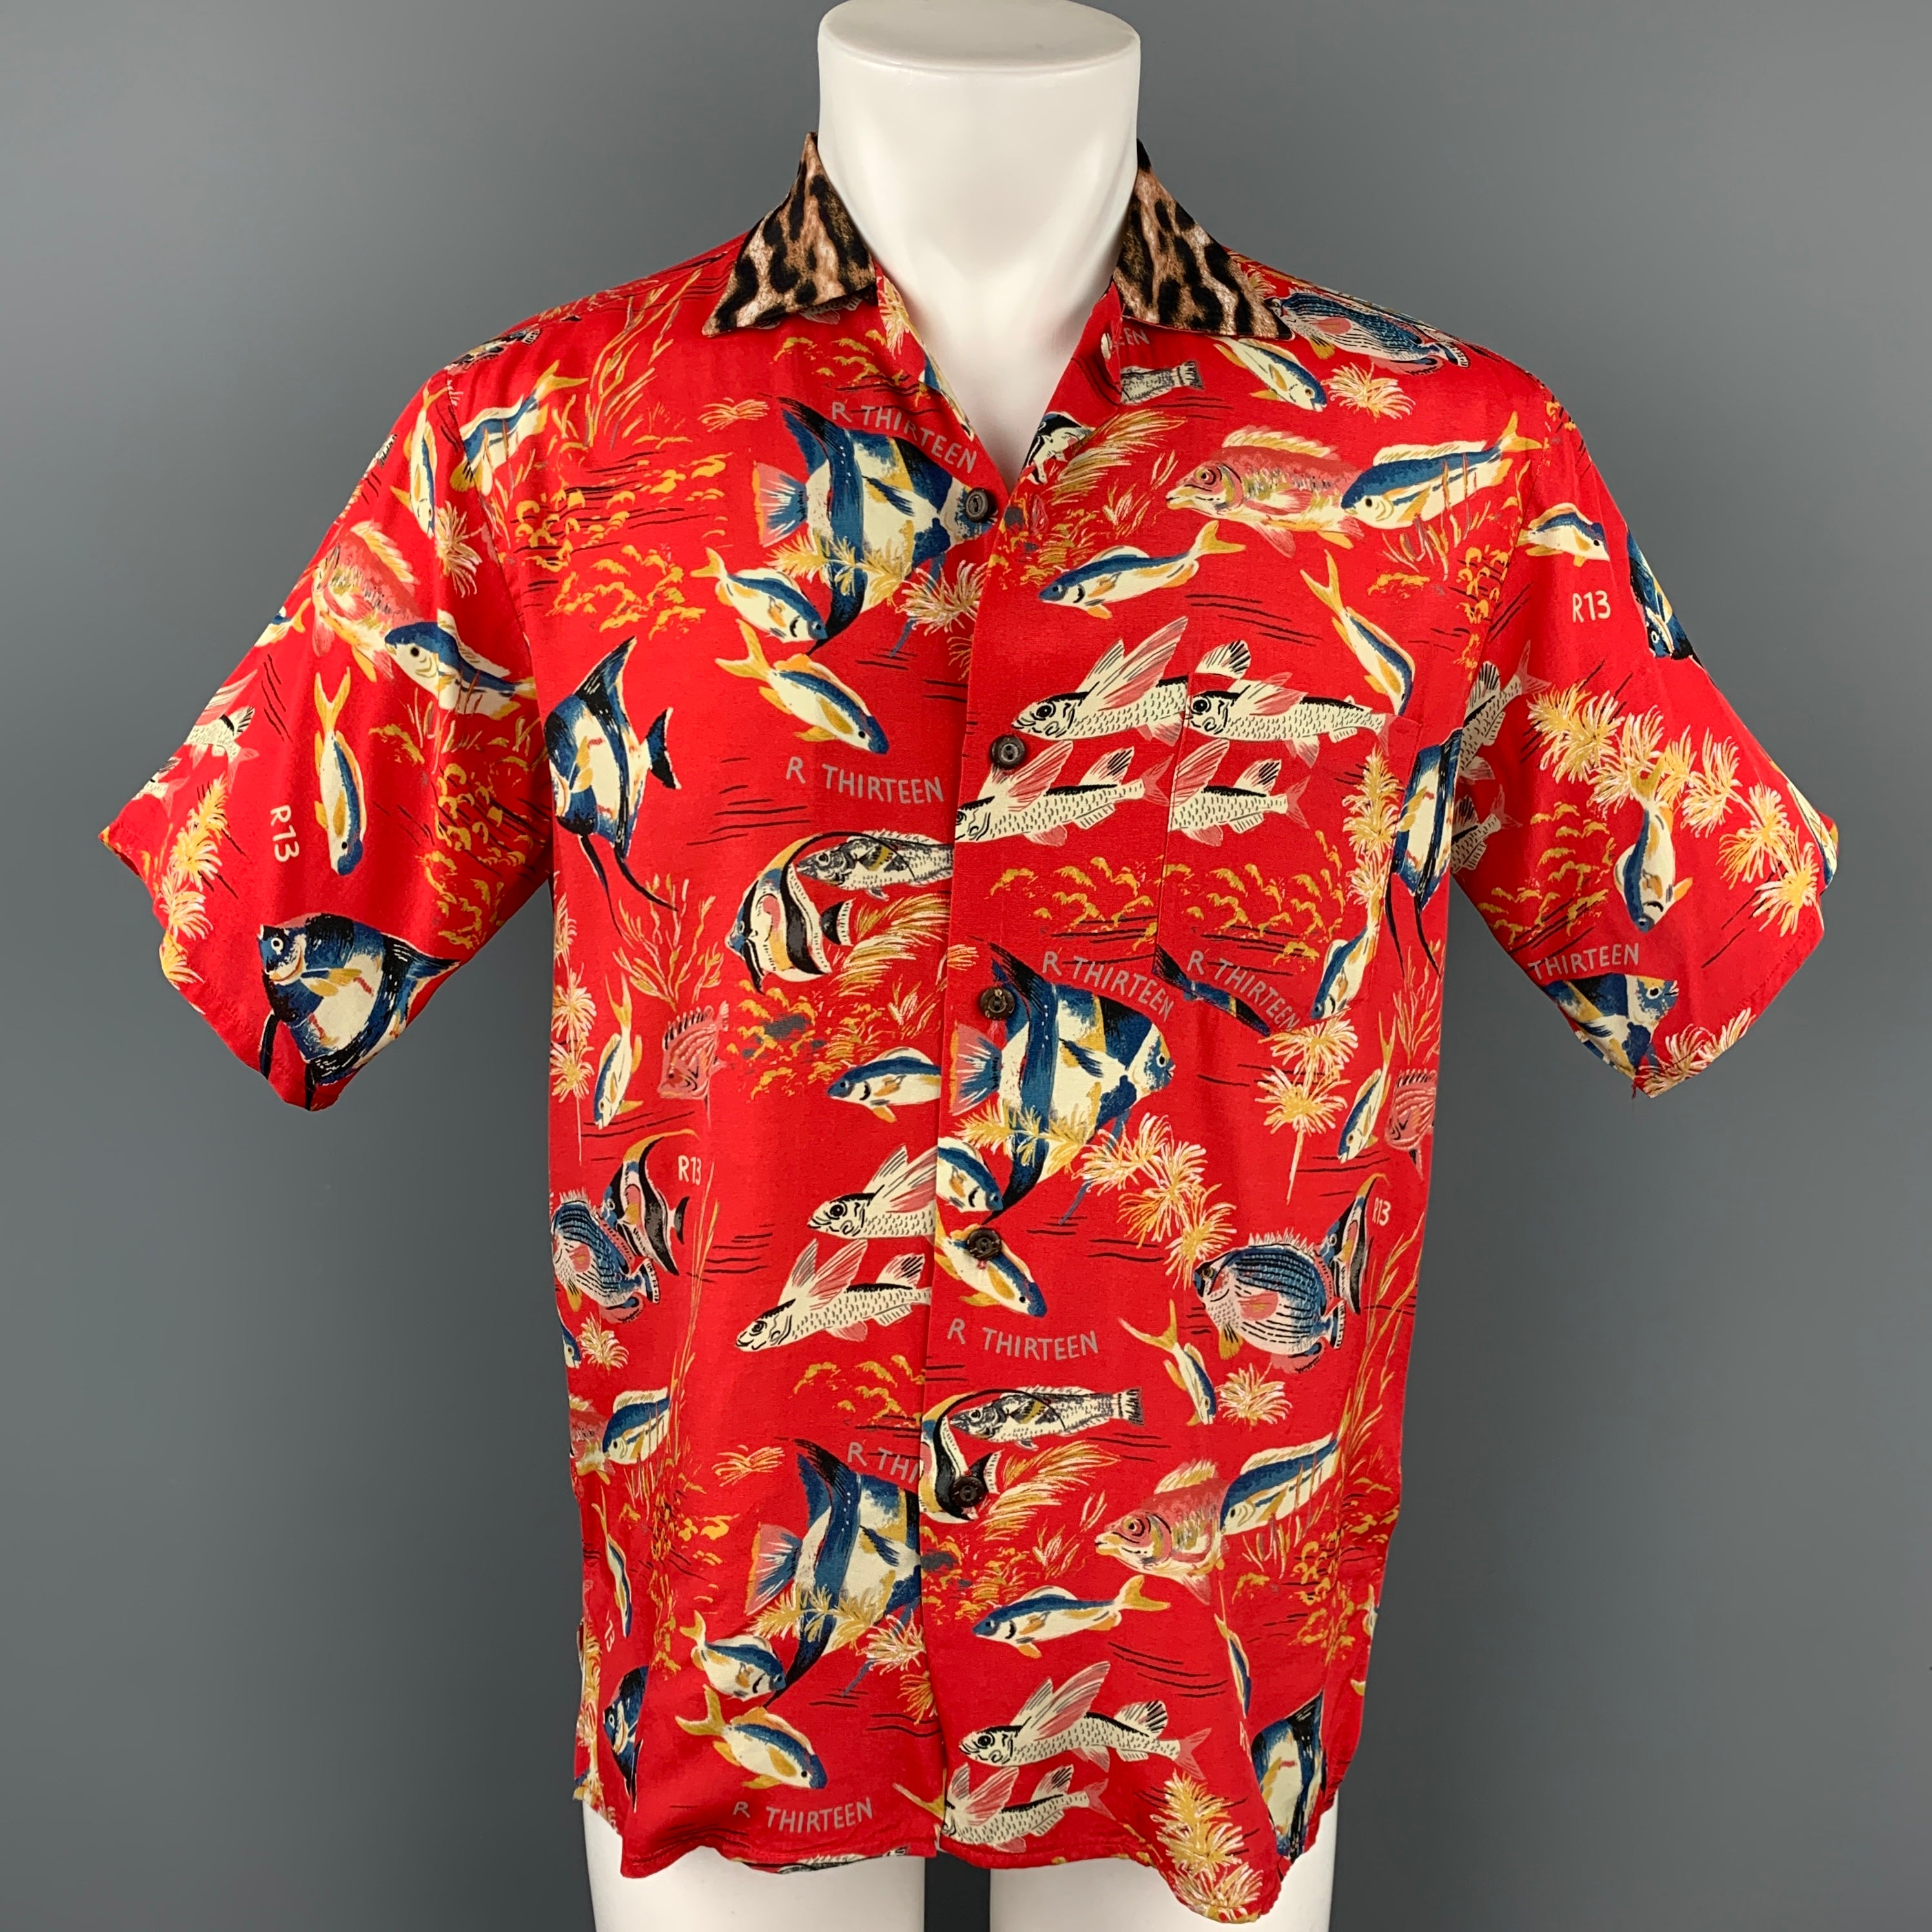 R13 Oversized Hawaiian Shirt in Red Fish & Leopard